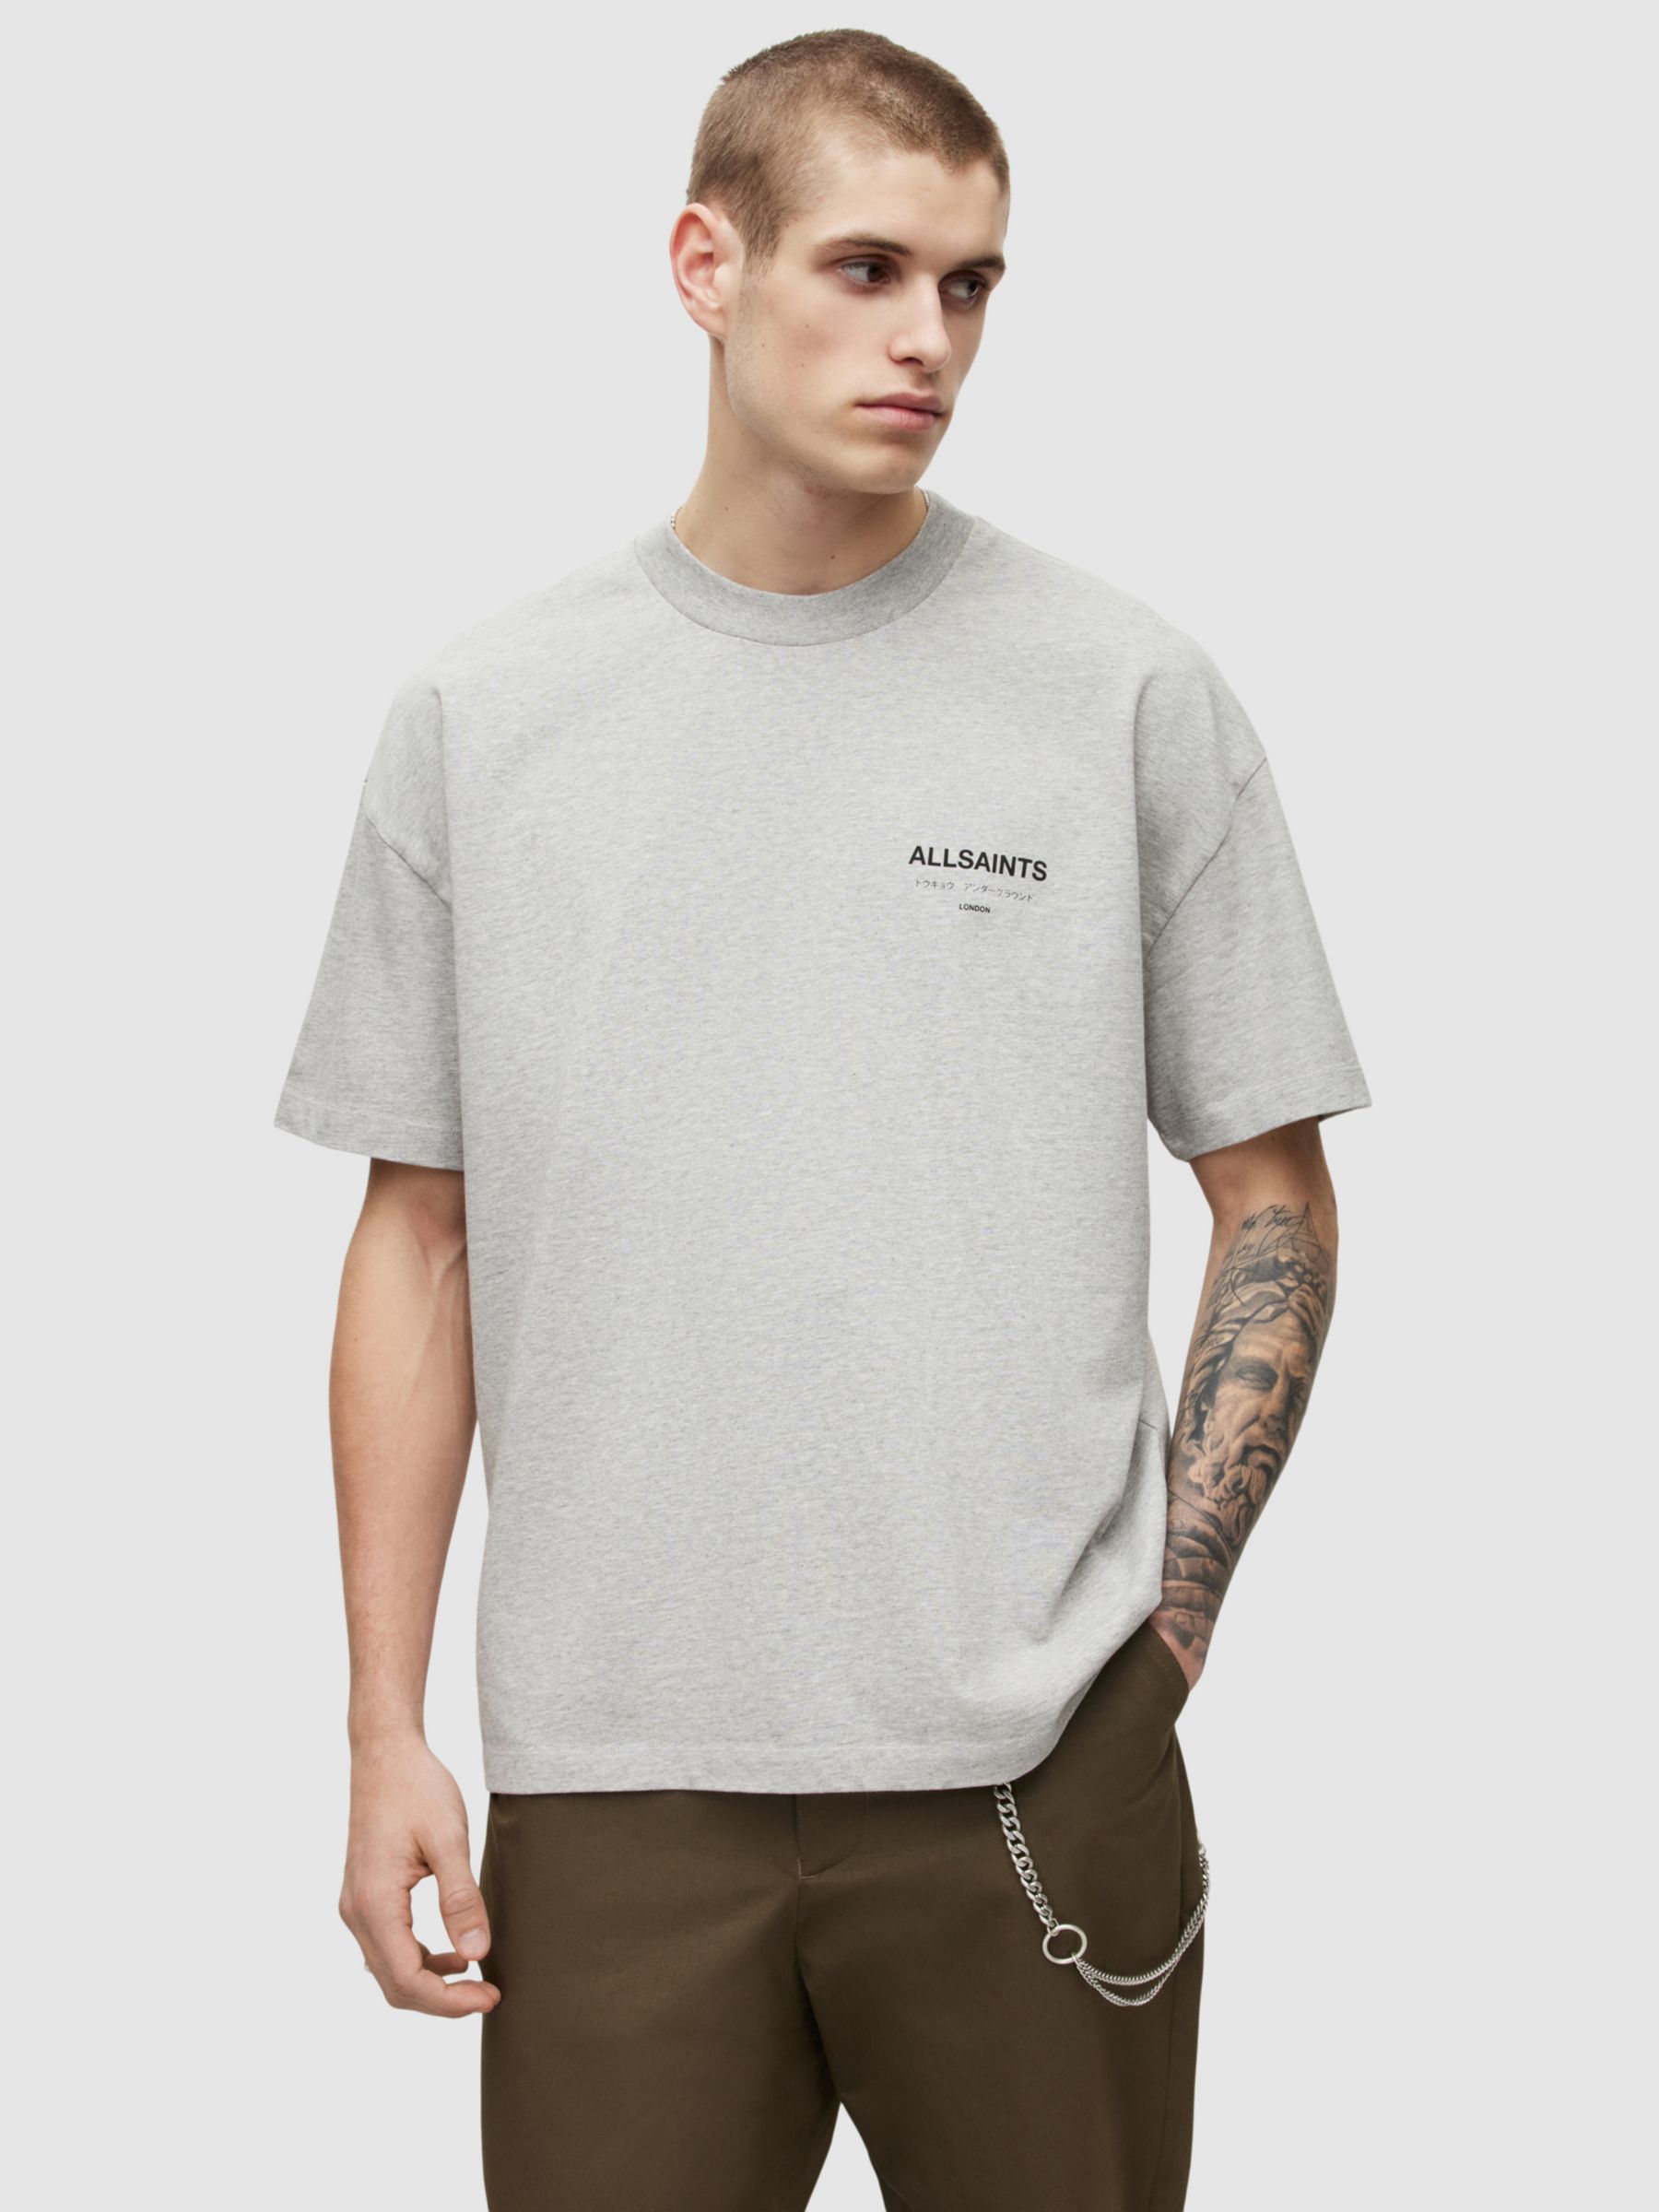 AllSaints Underground T-Shirt, Grey Marl at John Lewis & Partners